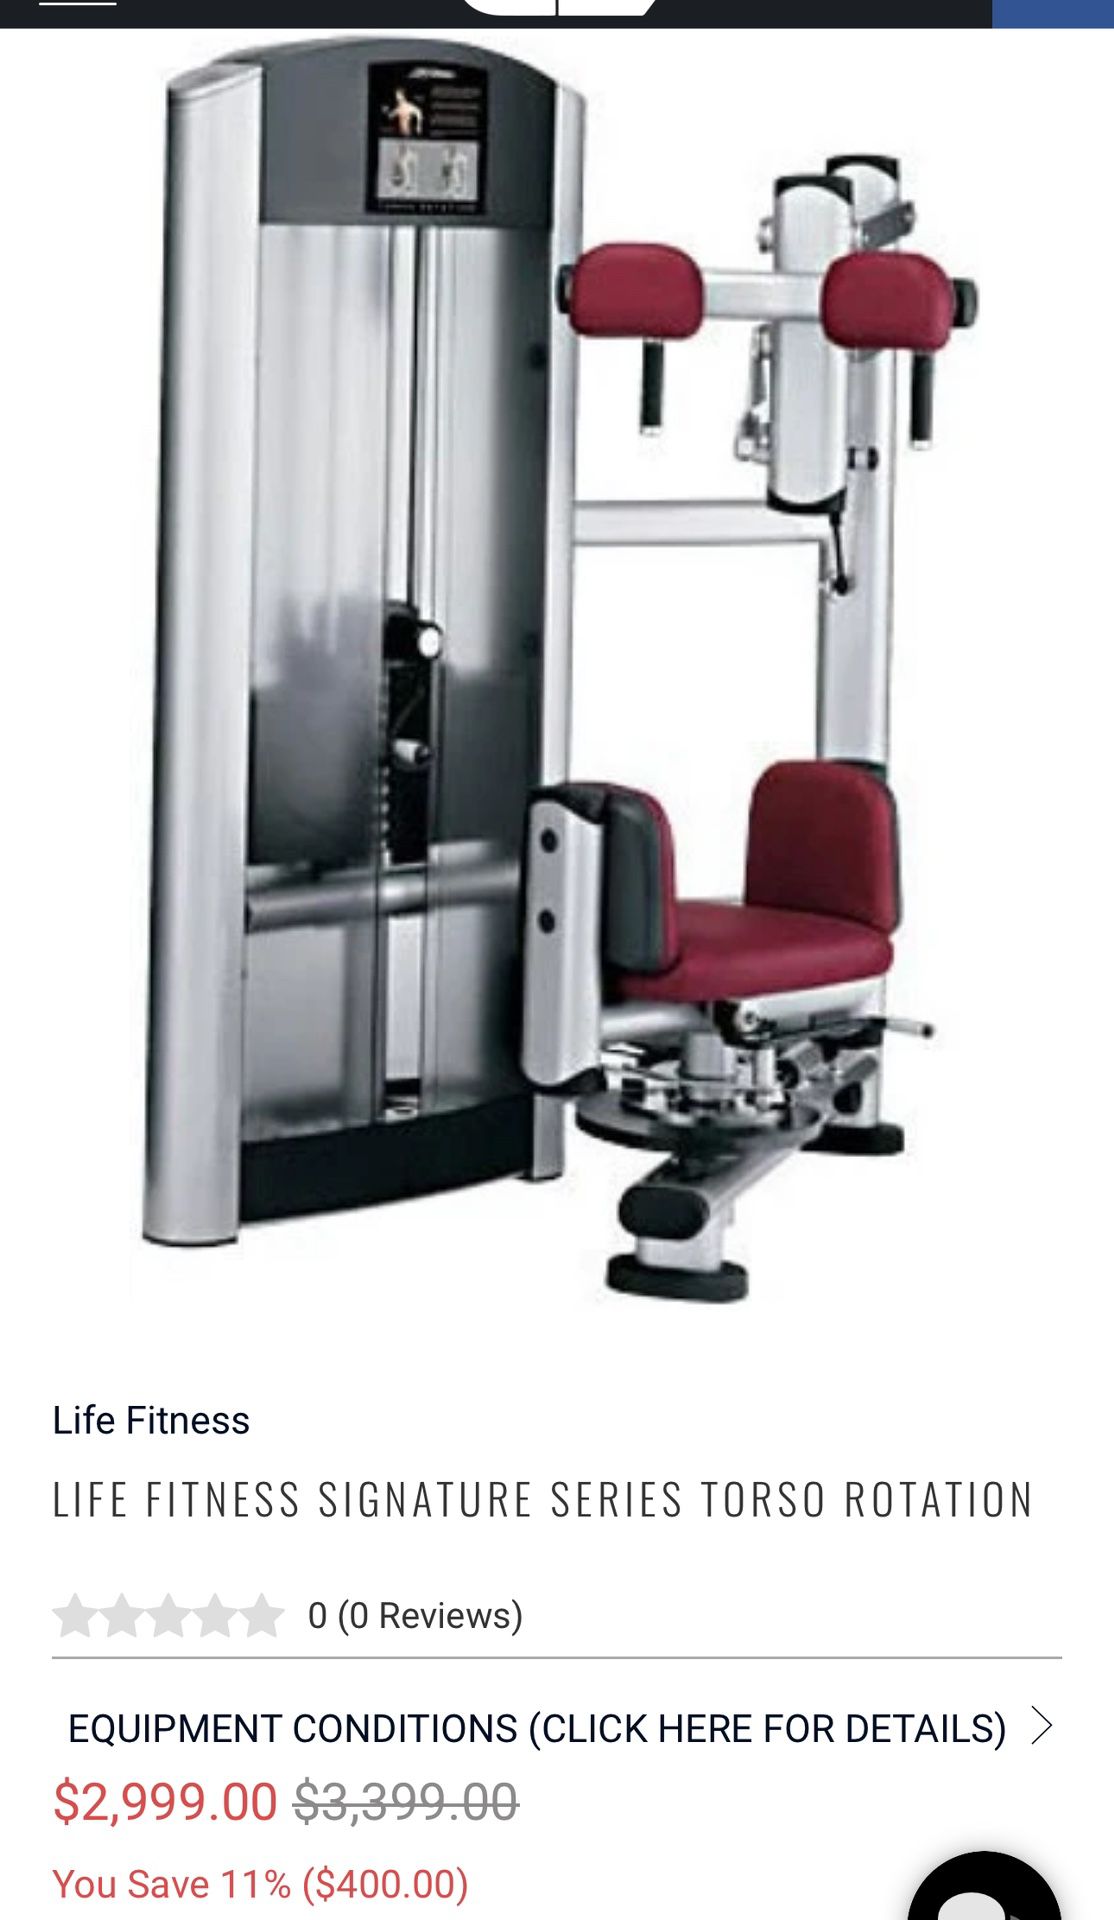 Life Fitness Torso Rotation Machine 